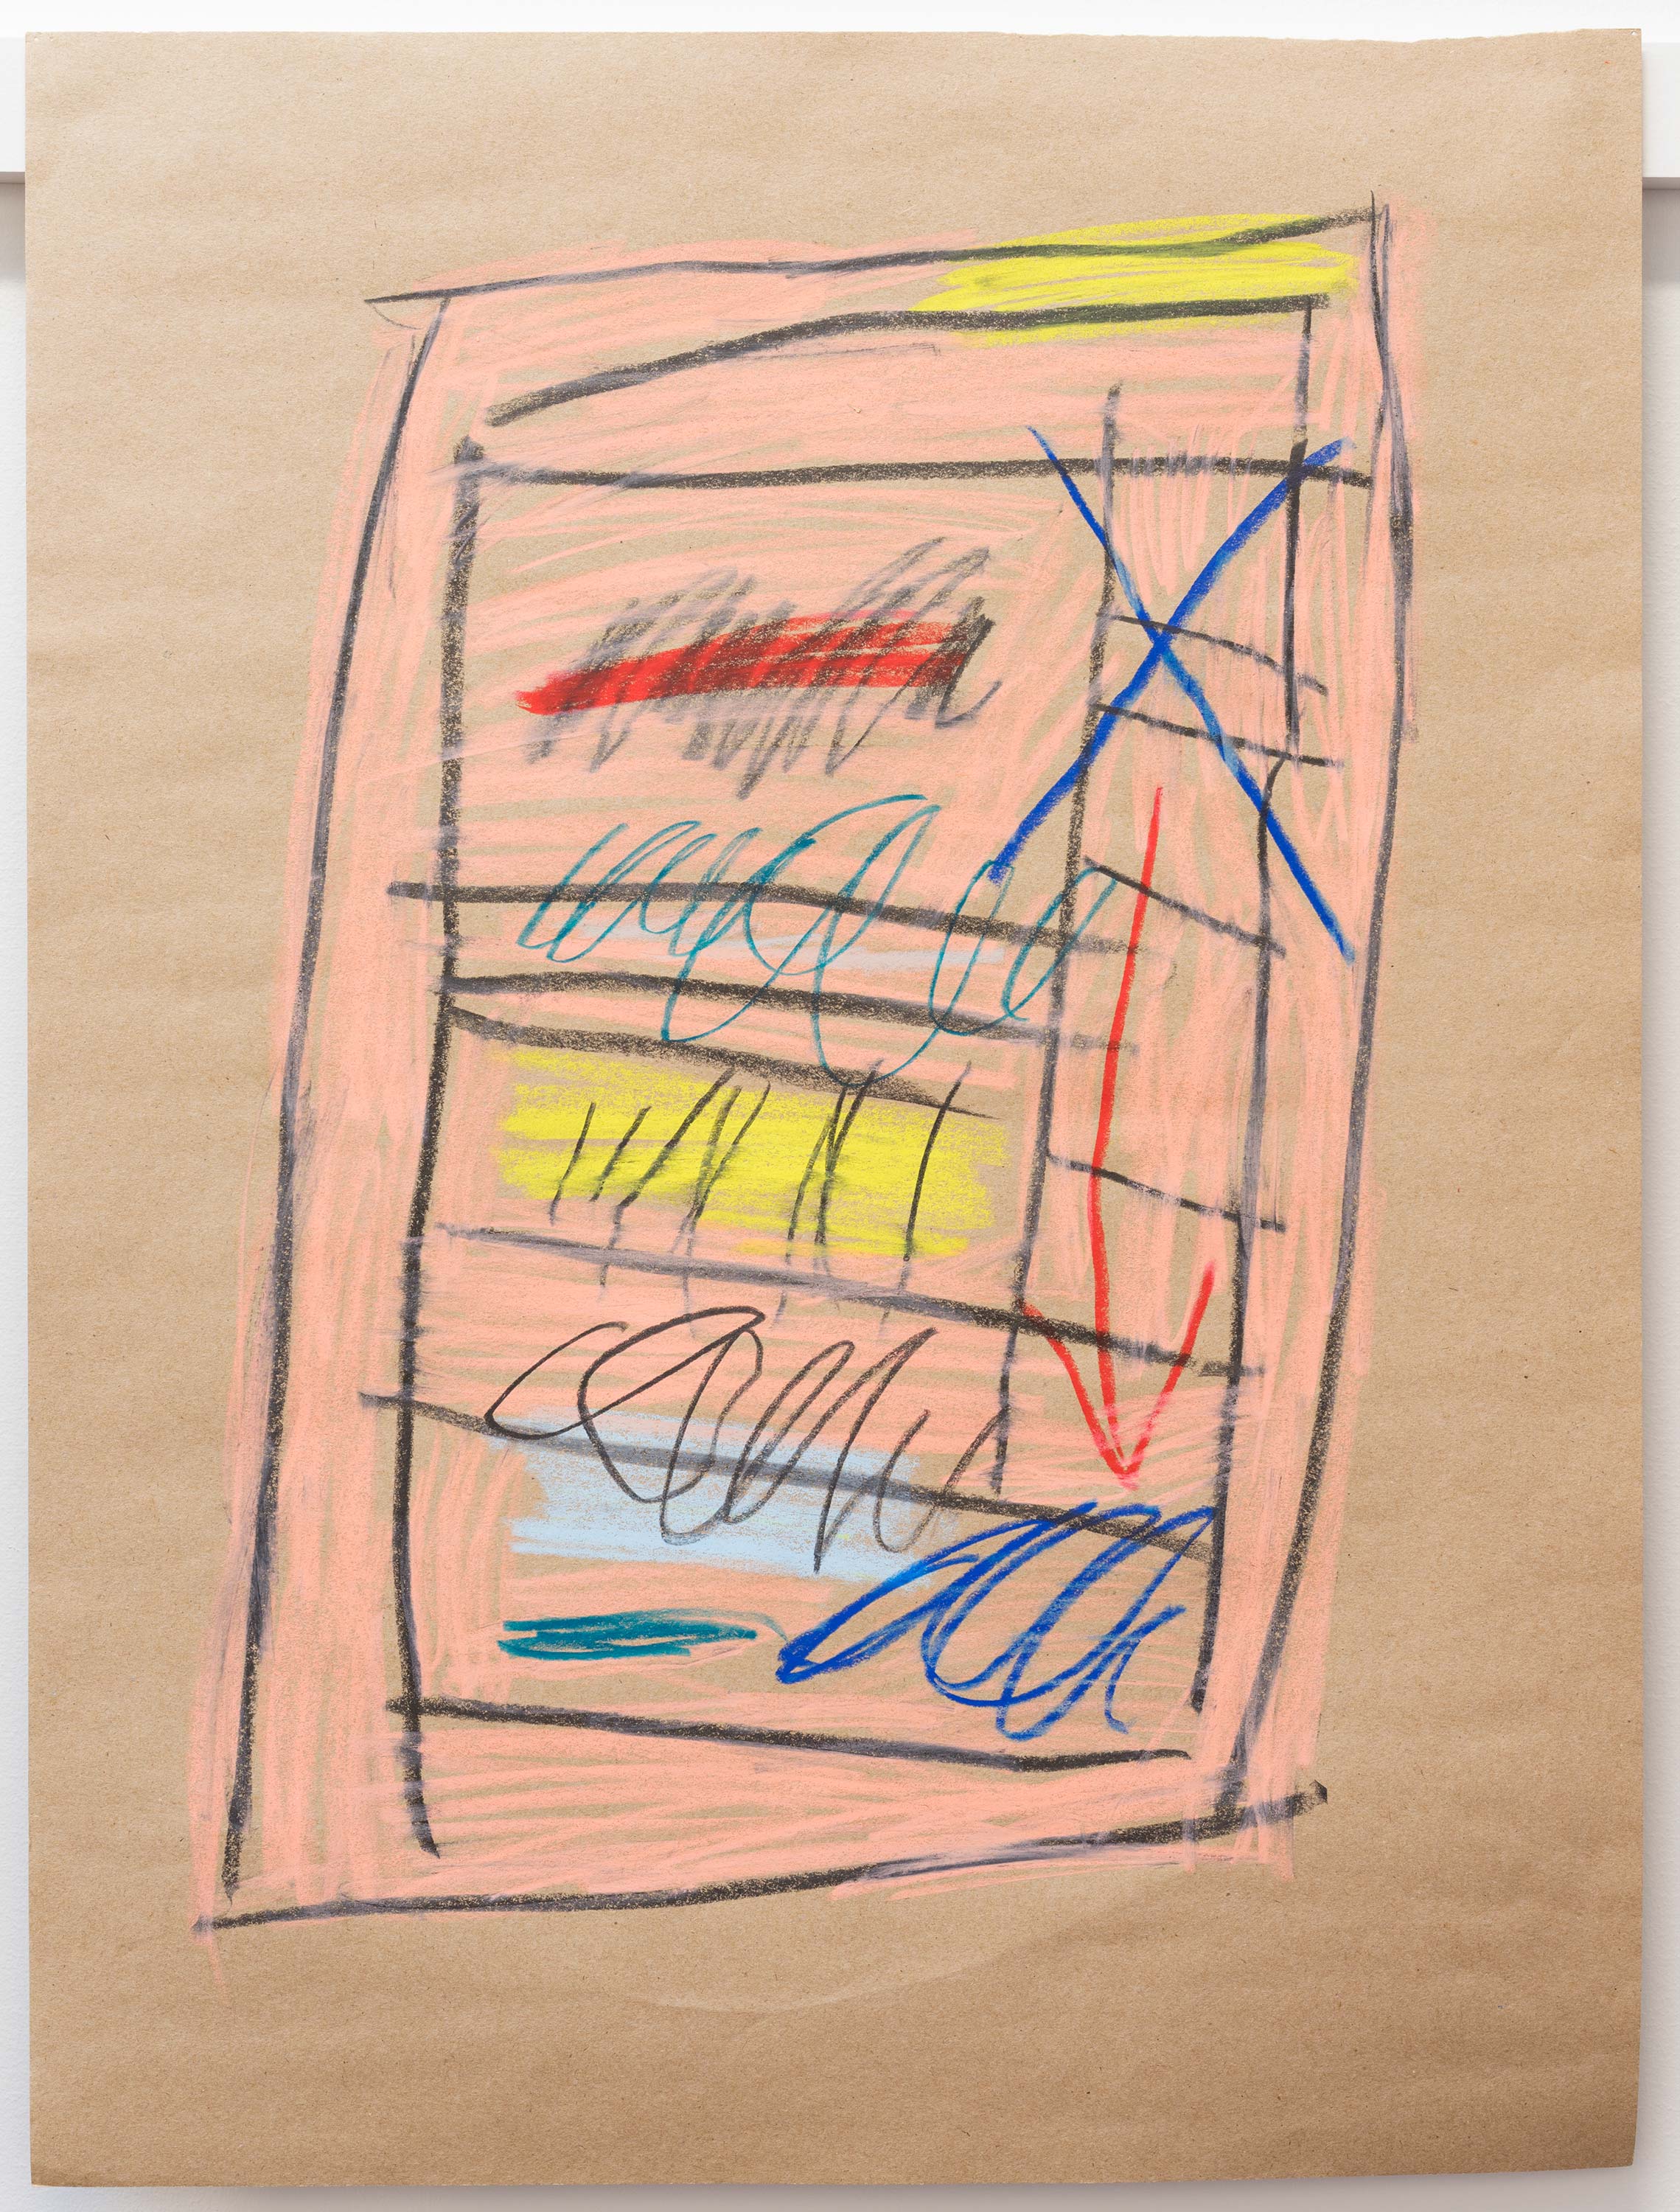 Al Freeman<br>Leaf 15<br>2015<br>Graphite and oil pastel on paper<br>18 x 24 inches (46 x 61 cm)